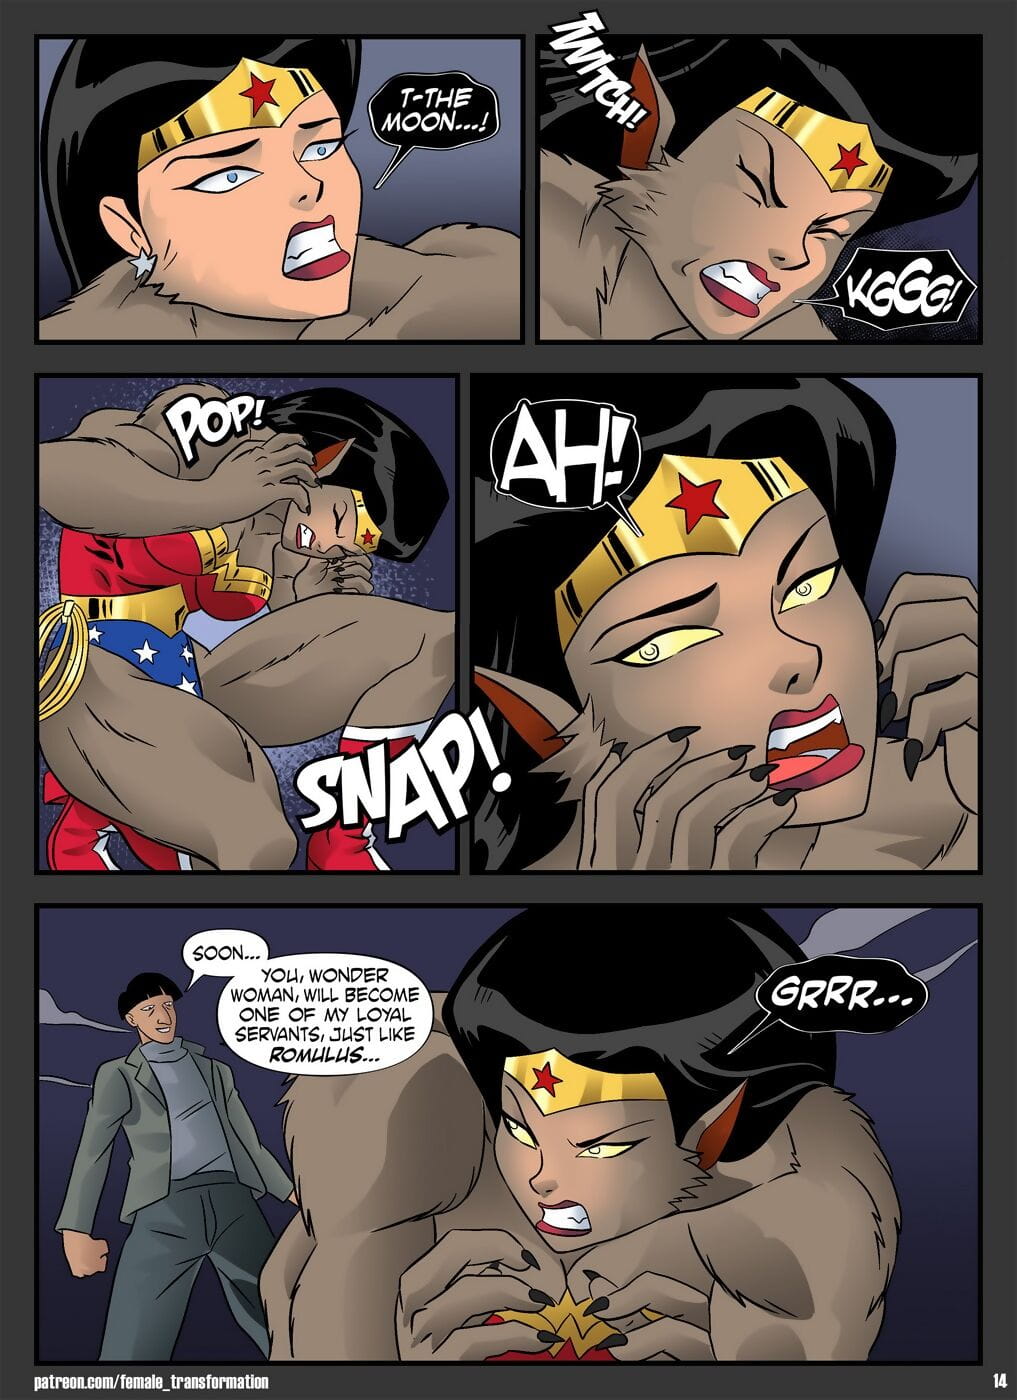 Locofuria- Anthro Wonder Woman vs Werewolf page 1